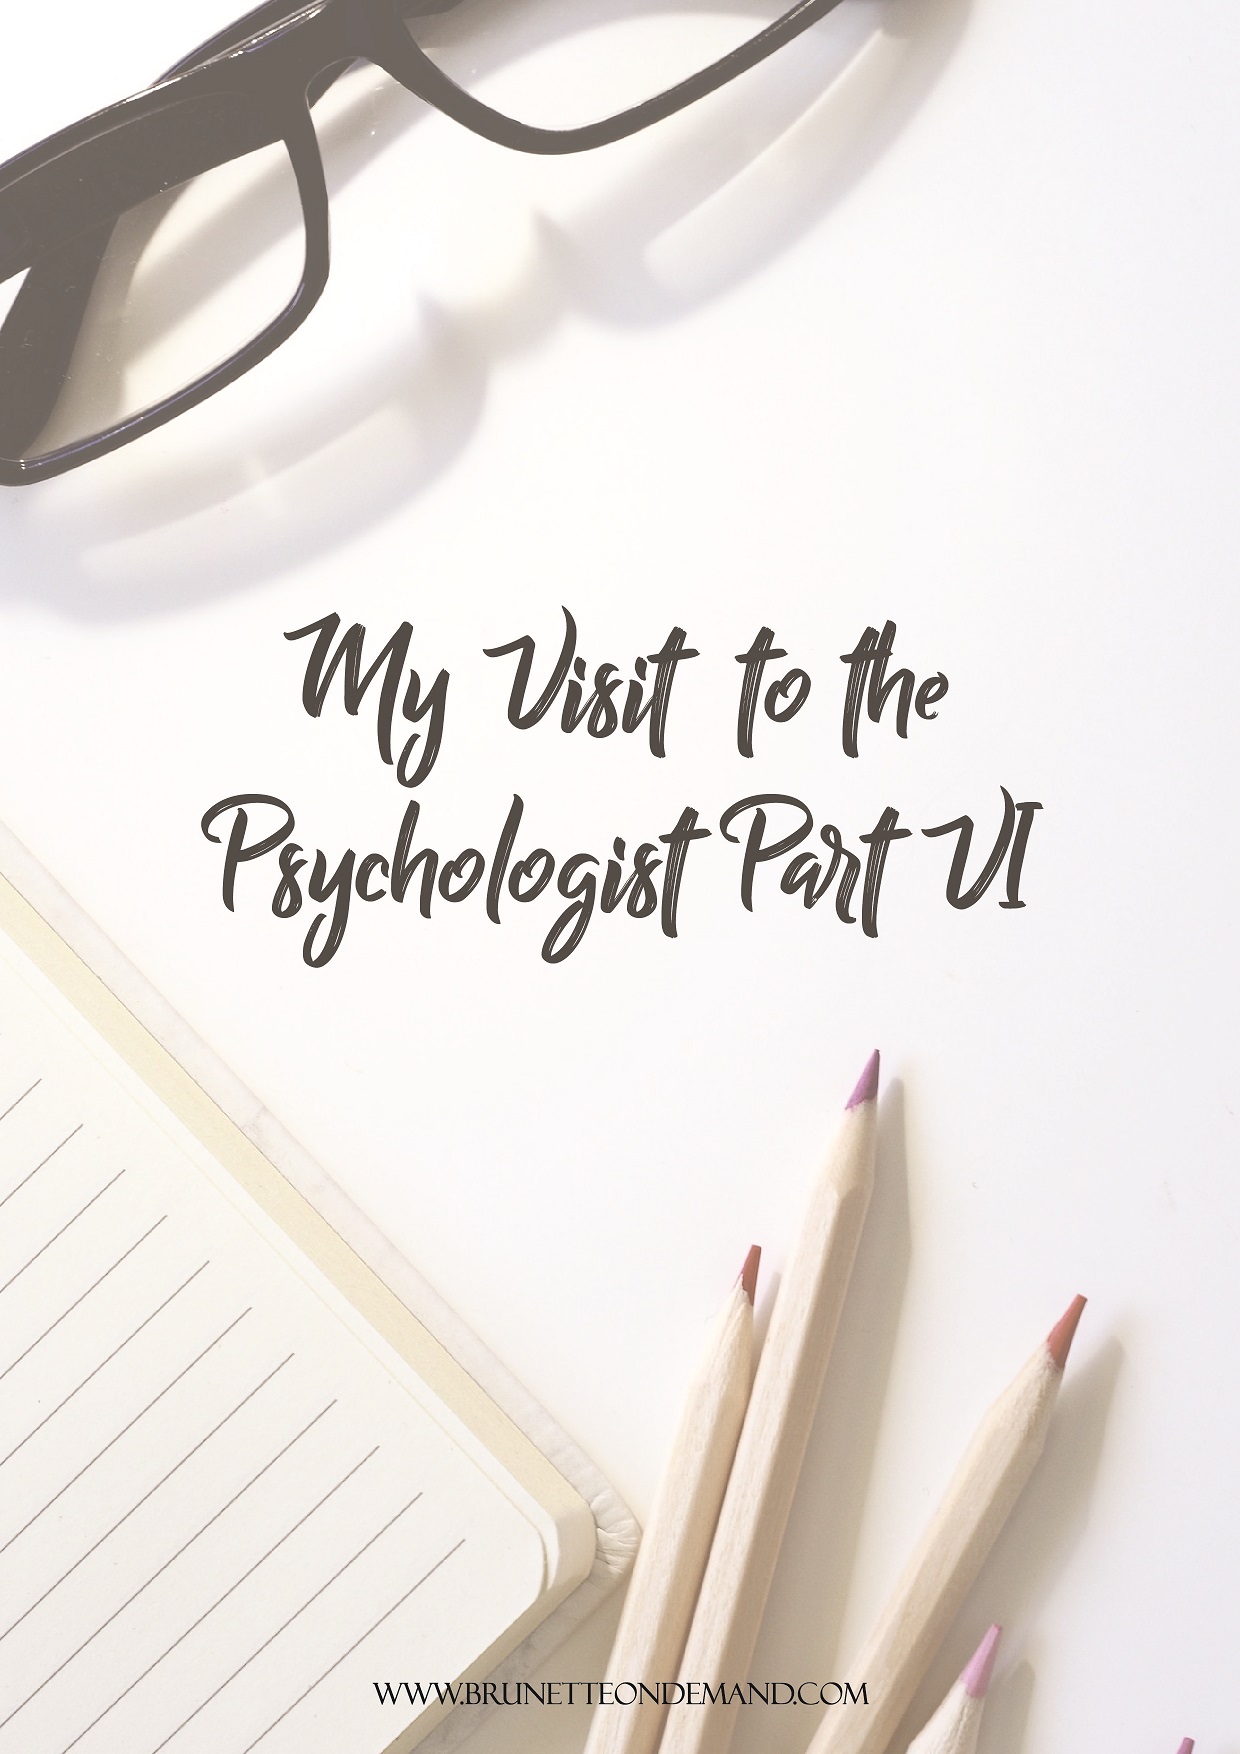 My Visit To The Psychologist Part VI